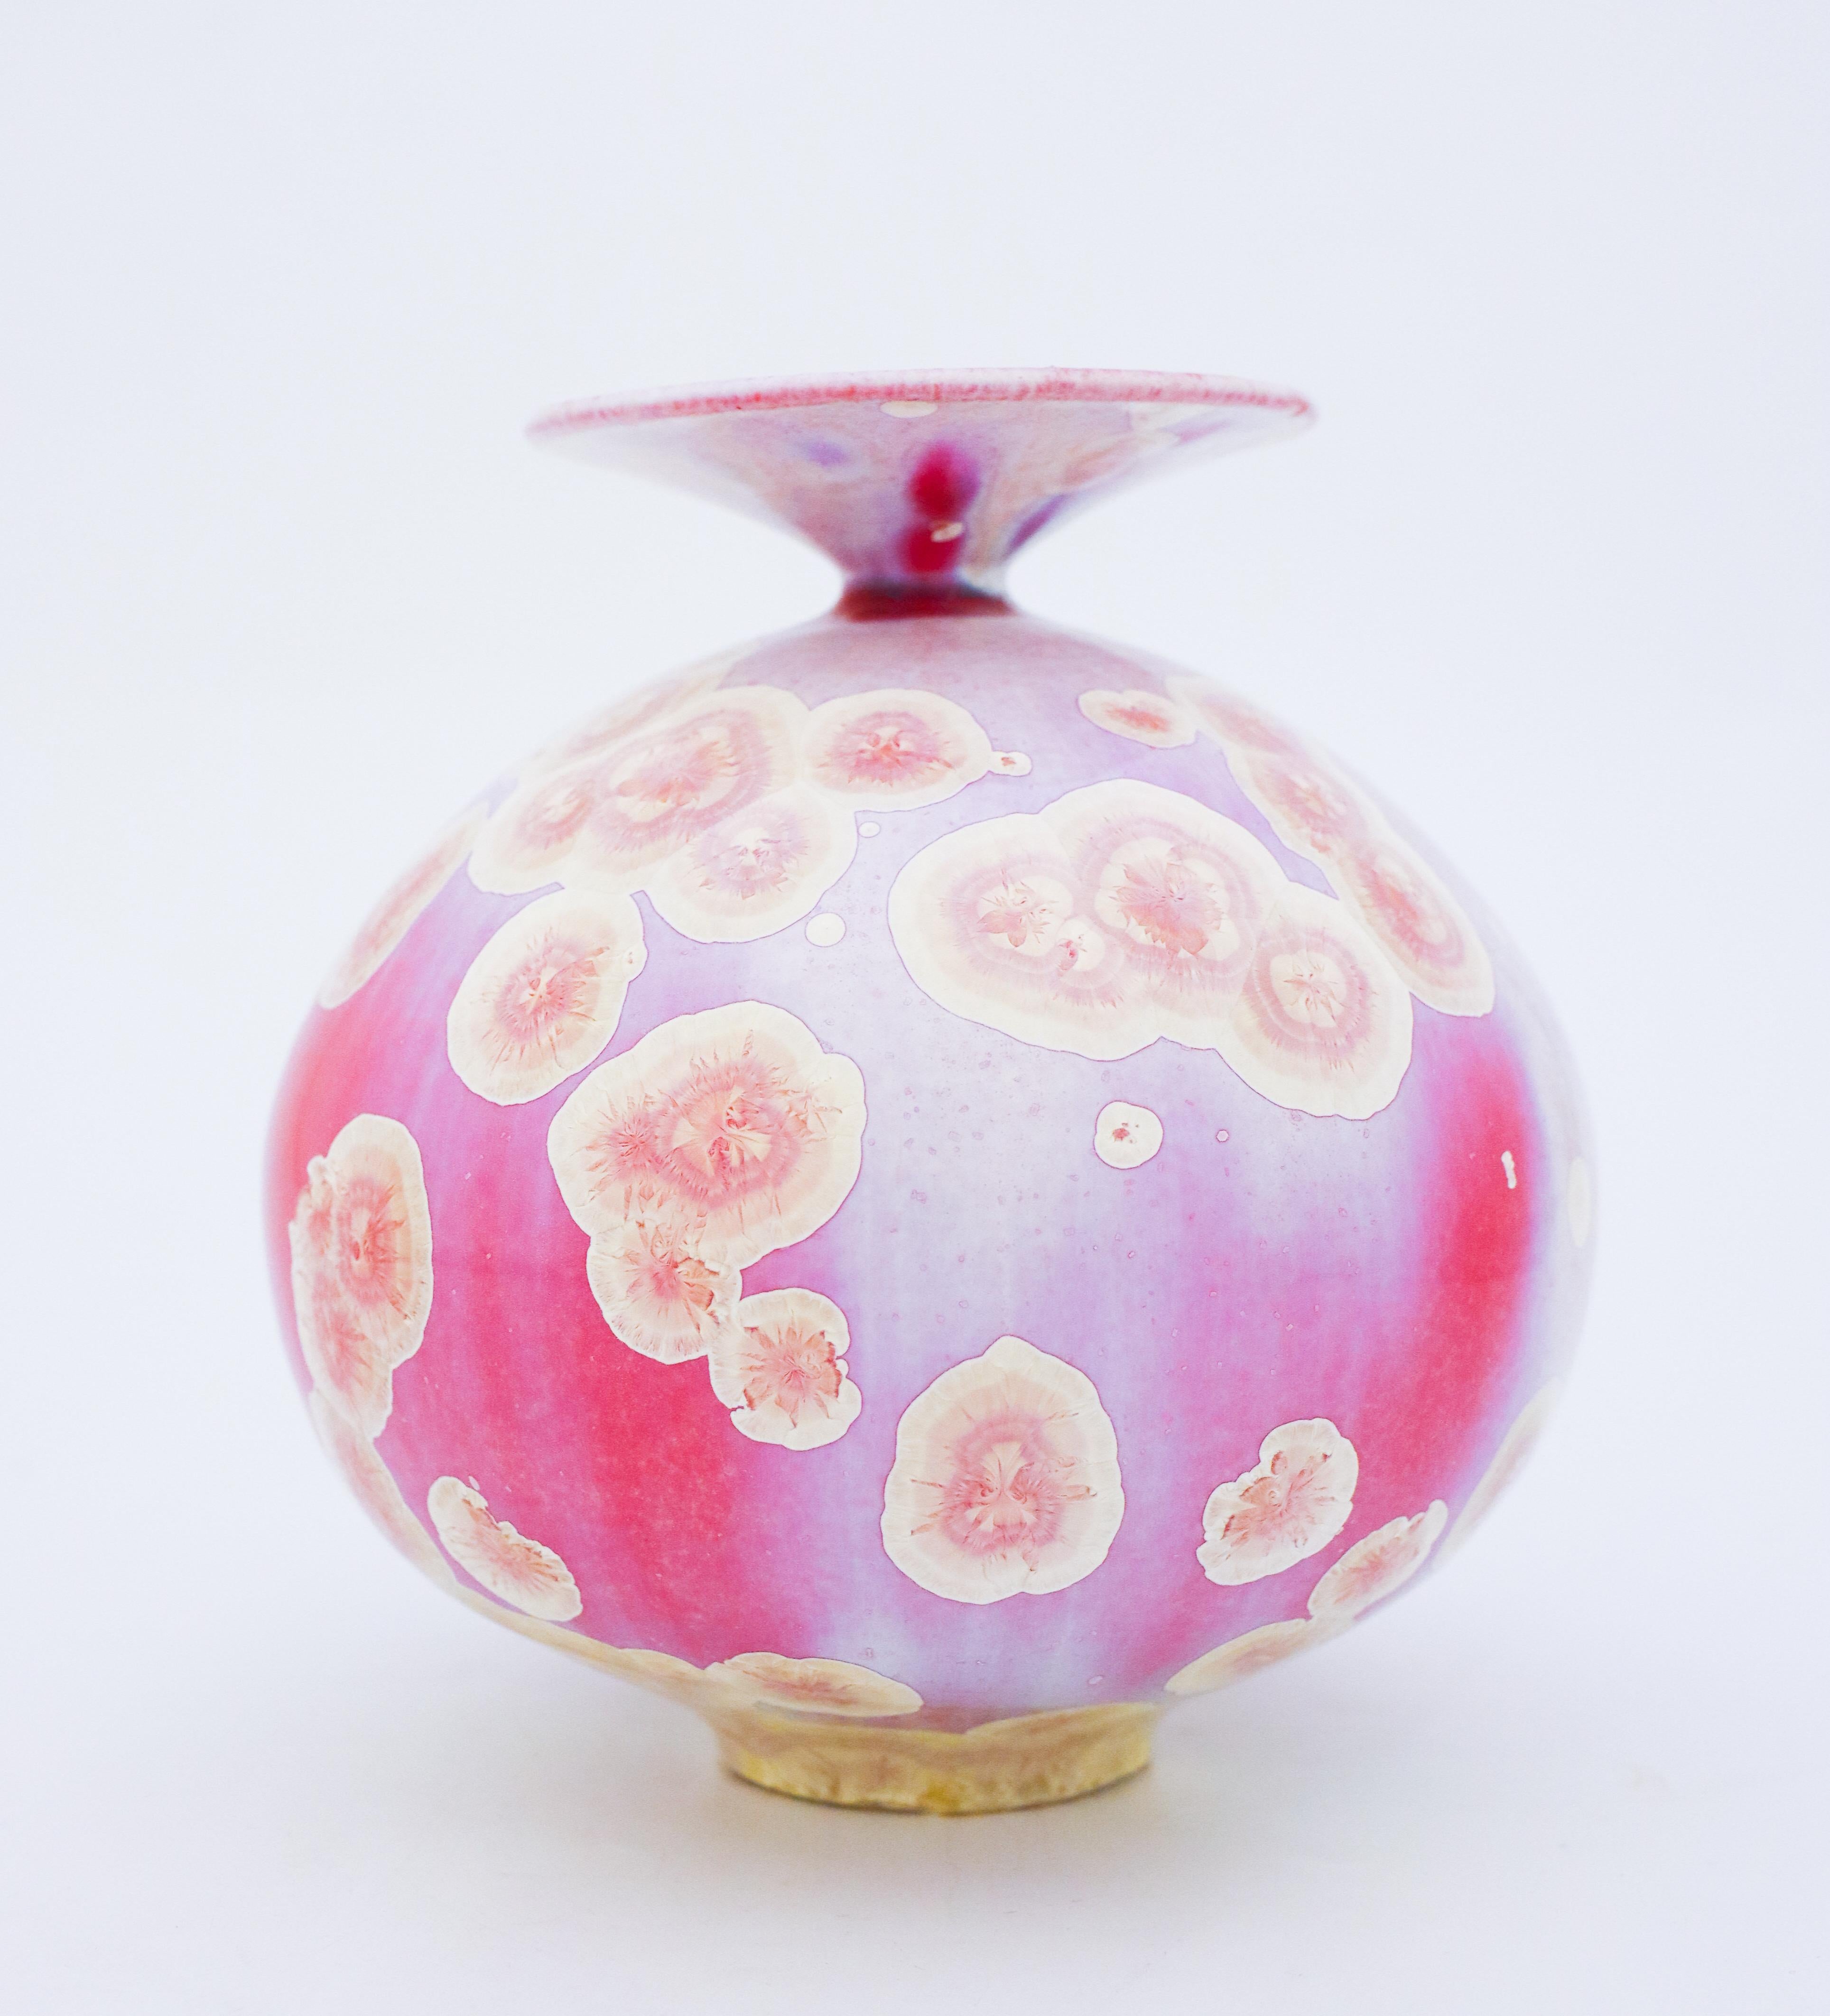 Glazed Isak Isaksson, Pink Vase with Crystalline Glaze, Contemporary Ceramic, Sweden.